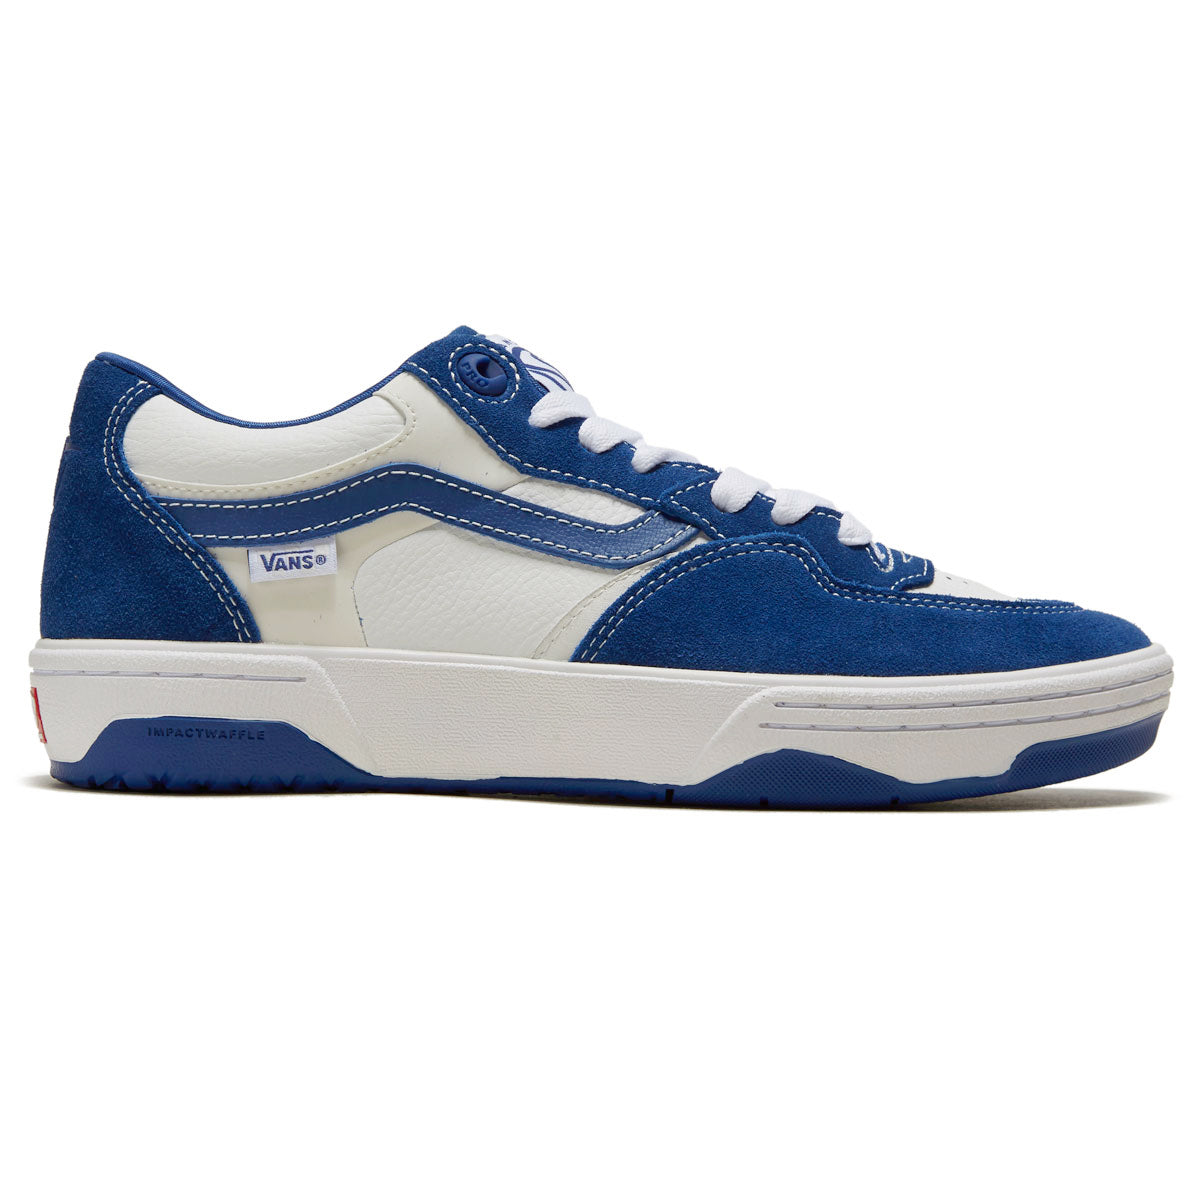 Vans Rowan 2 Shoes - True Blue/White image 1